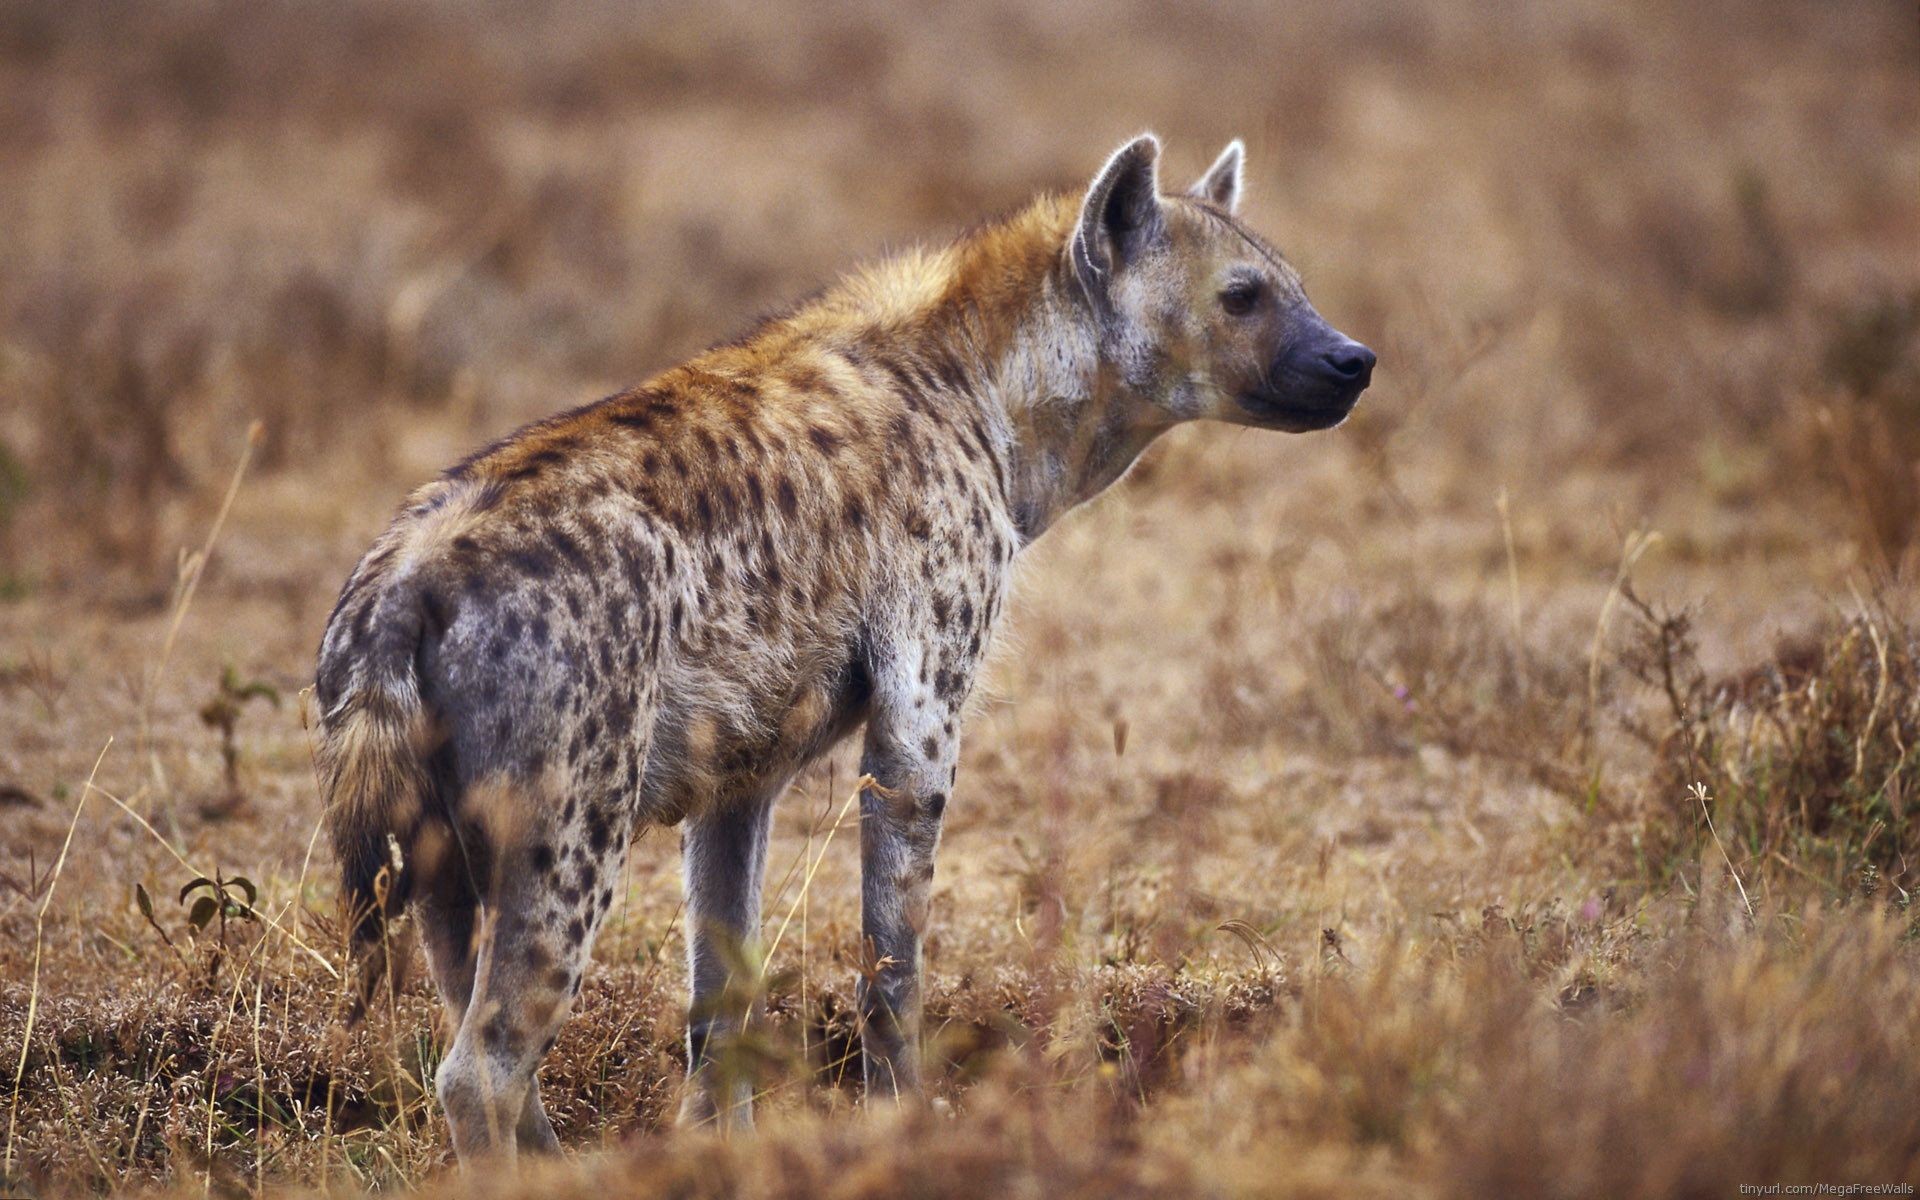 Hyena In Jungle HD Image Background Wallpaper